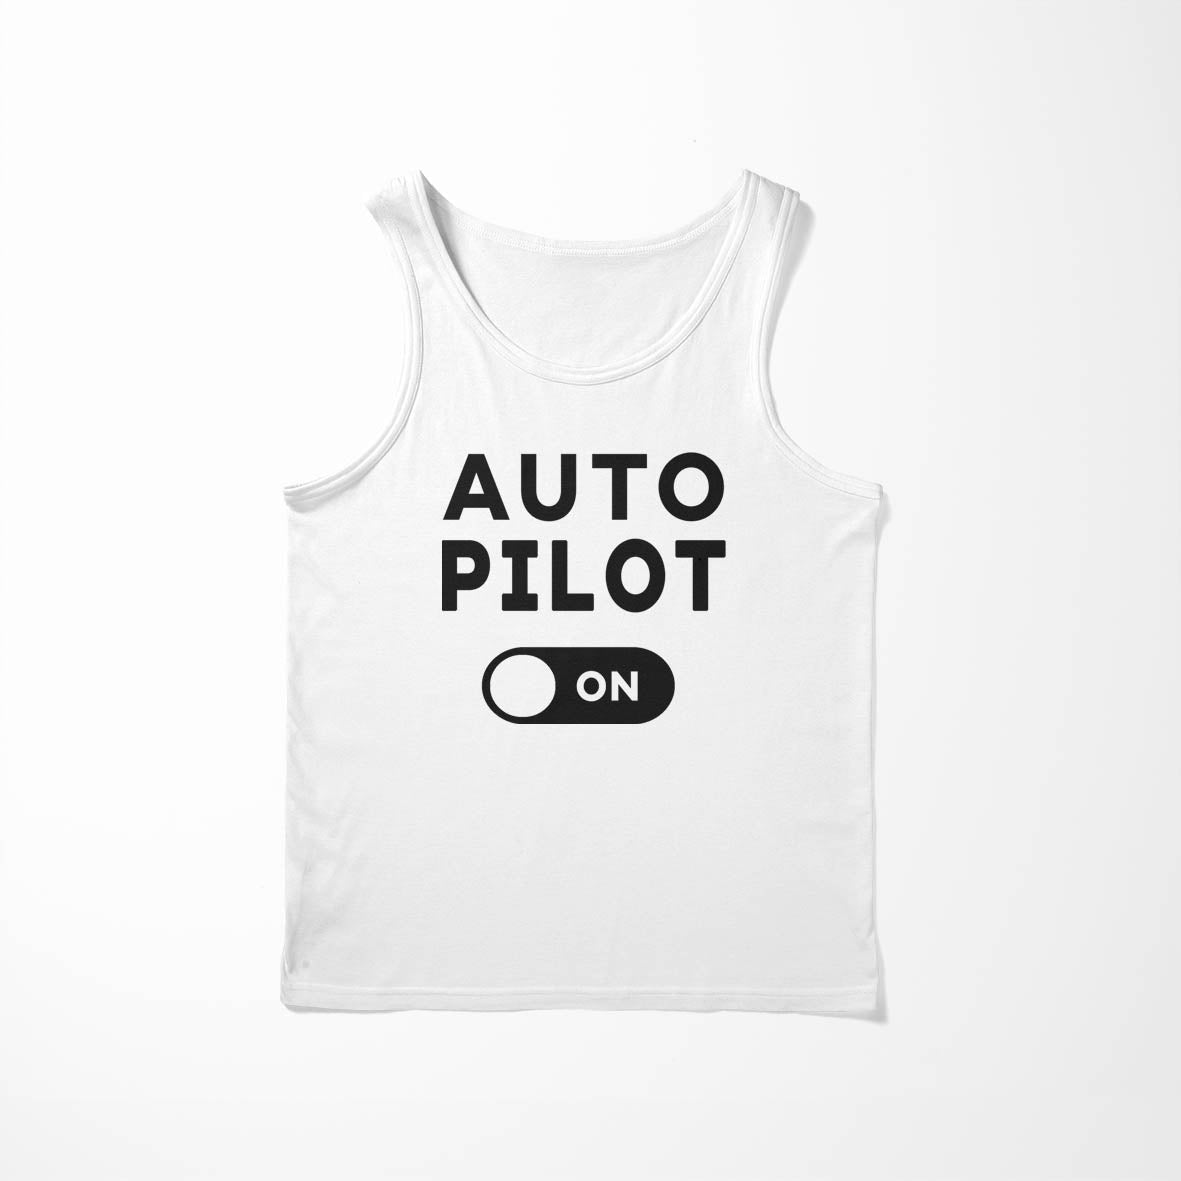 Auto Pilot ON Designed Tank Tops